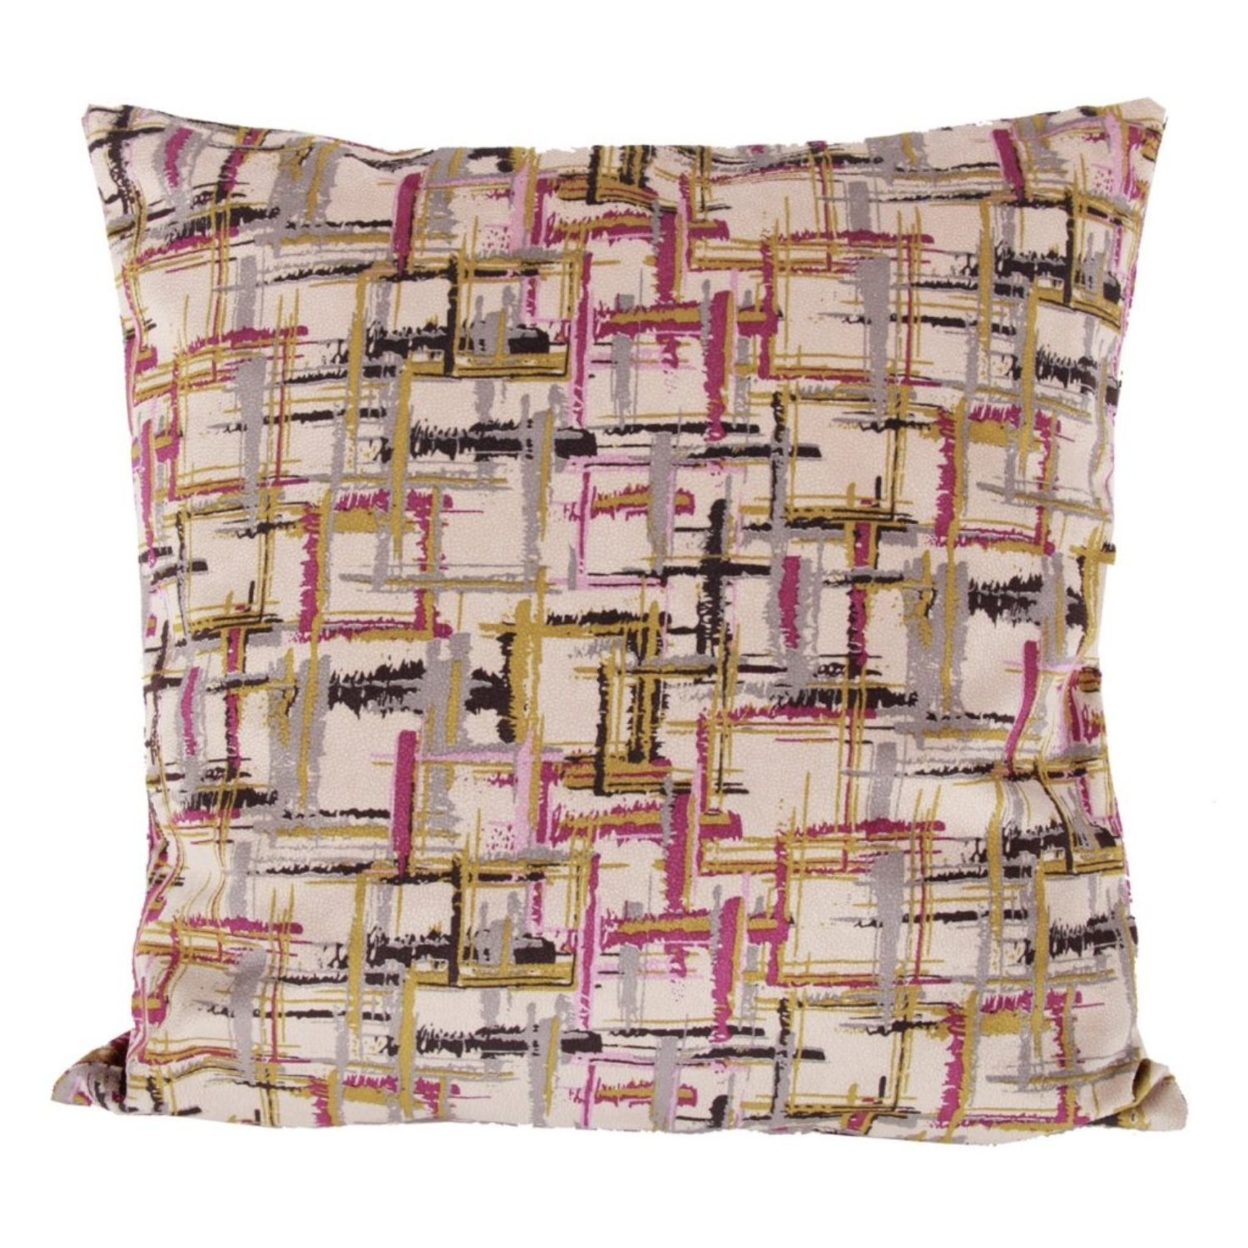 Fabric Accent Pillow In Geometric Pattern, Multicolor- Saltoro Sherpi